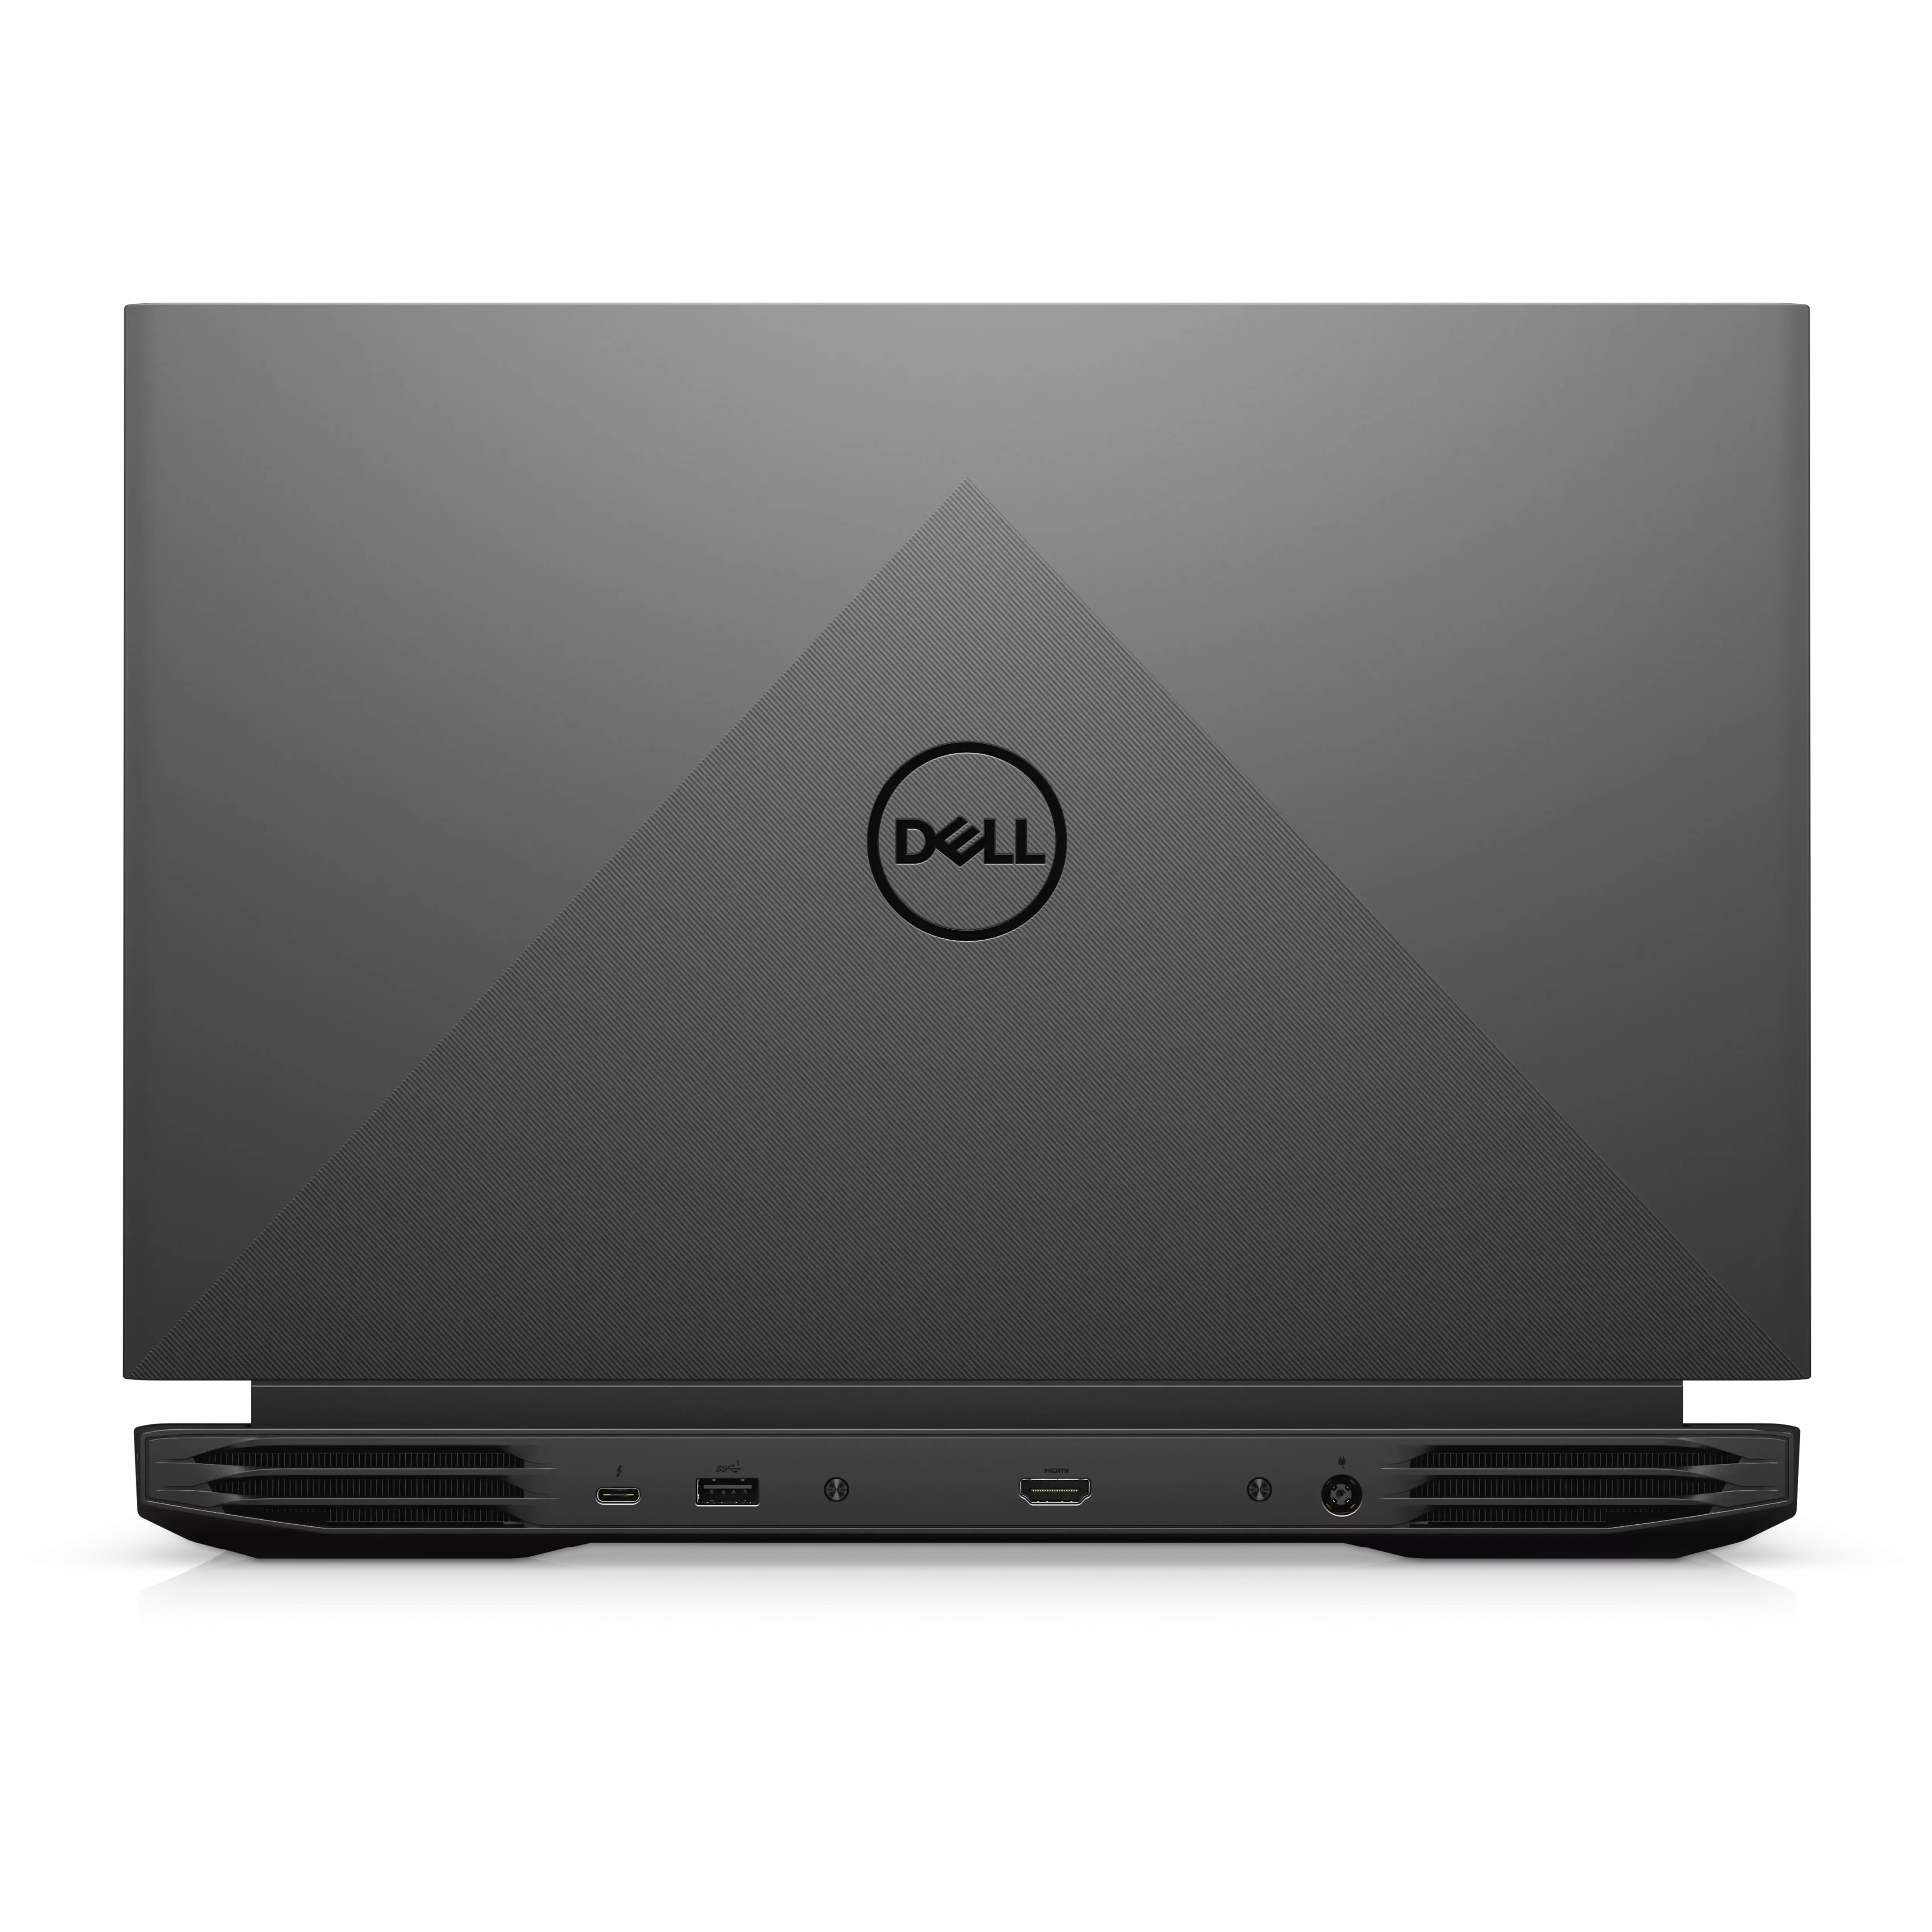 Dell G5 G5510 2021 Price in Nepal | 8-core CPU, RTX 3060 GPU